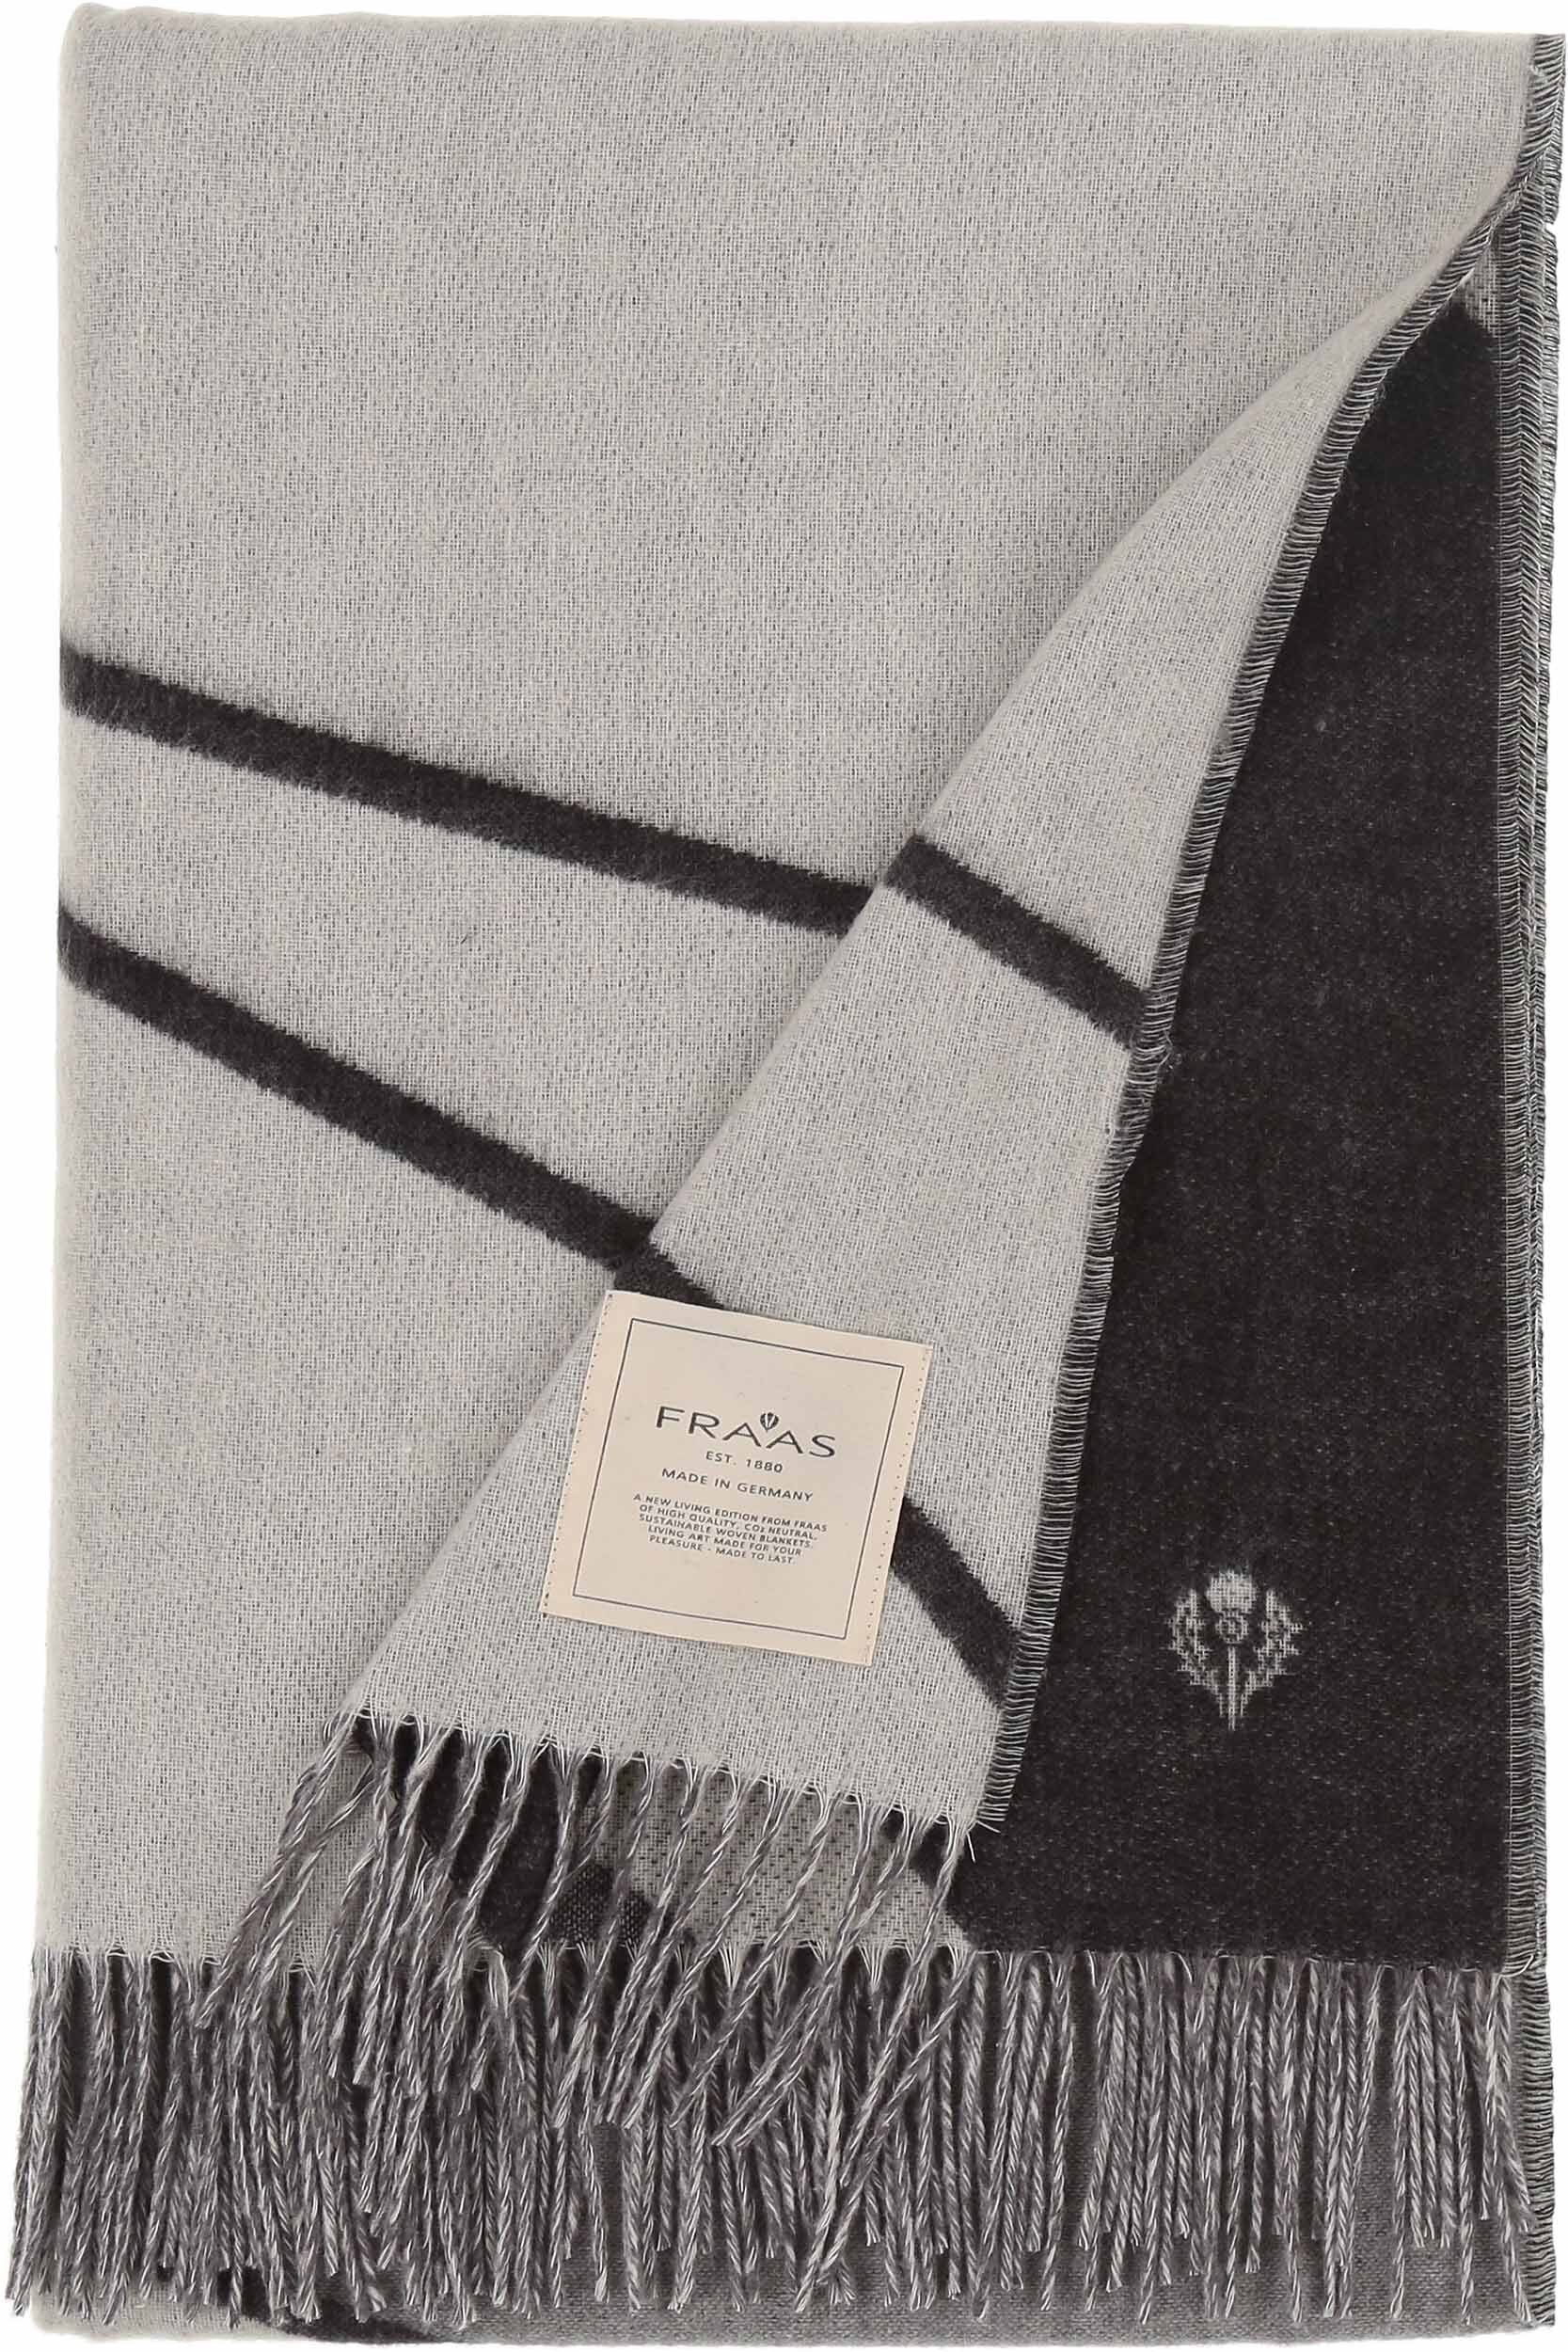 Plaid Baumwolle Decke, Fraas, Co2 neutral, FRAAS Cashmink-Decke mit  abstraktem Marmor-Design - Made in Germany